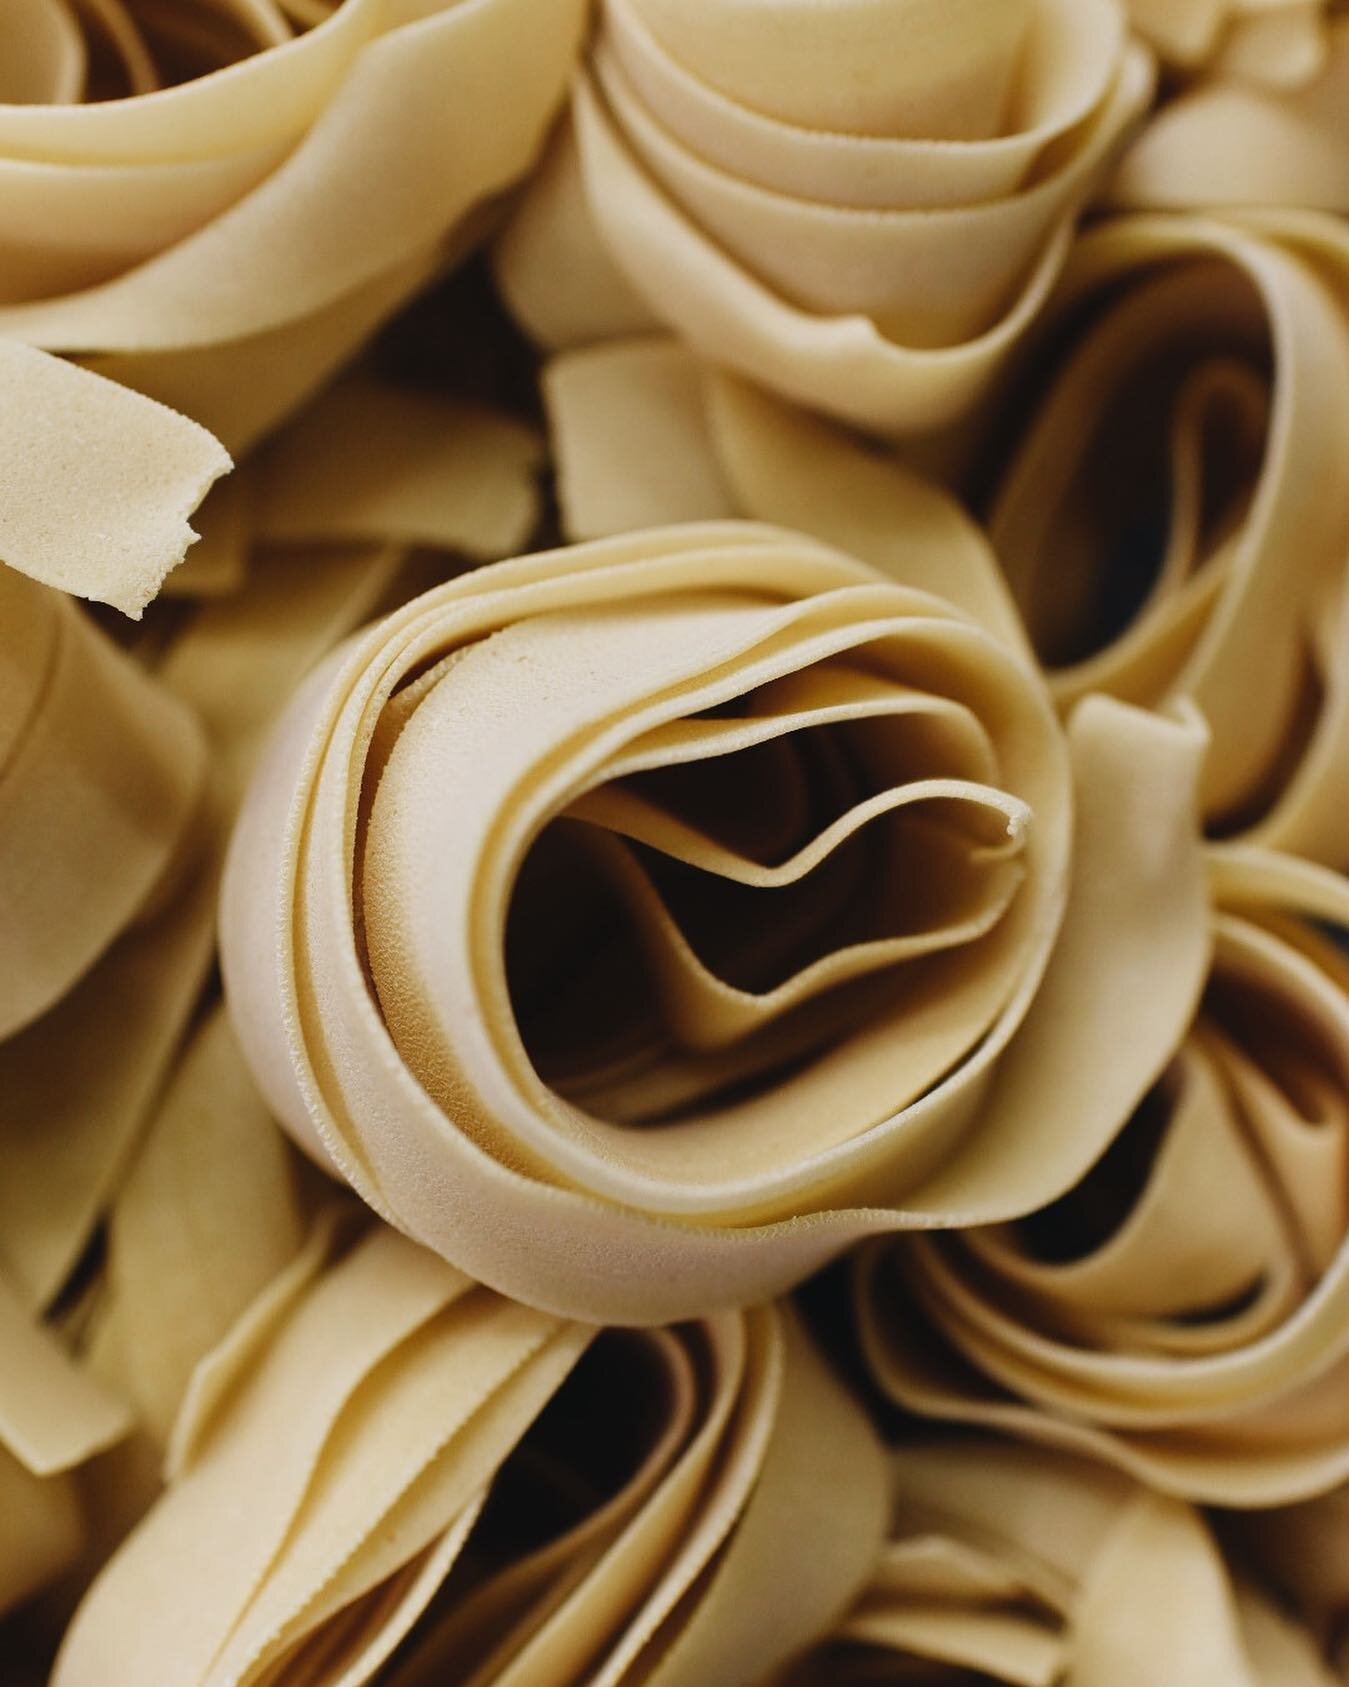 Fresh pasta forever and always.
#florasmarketrun